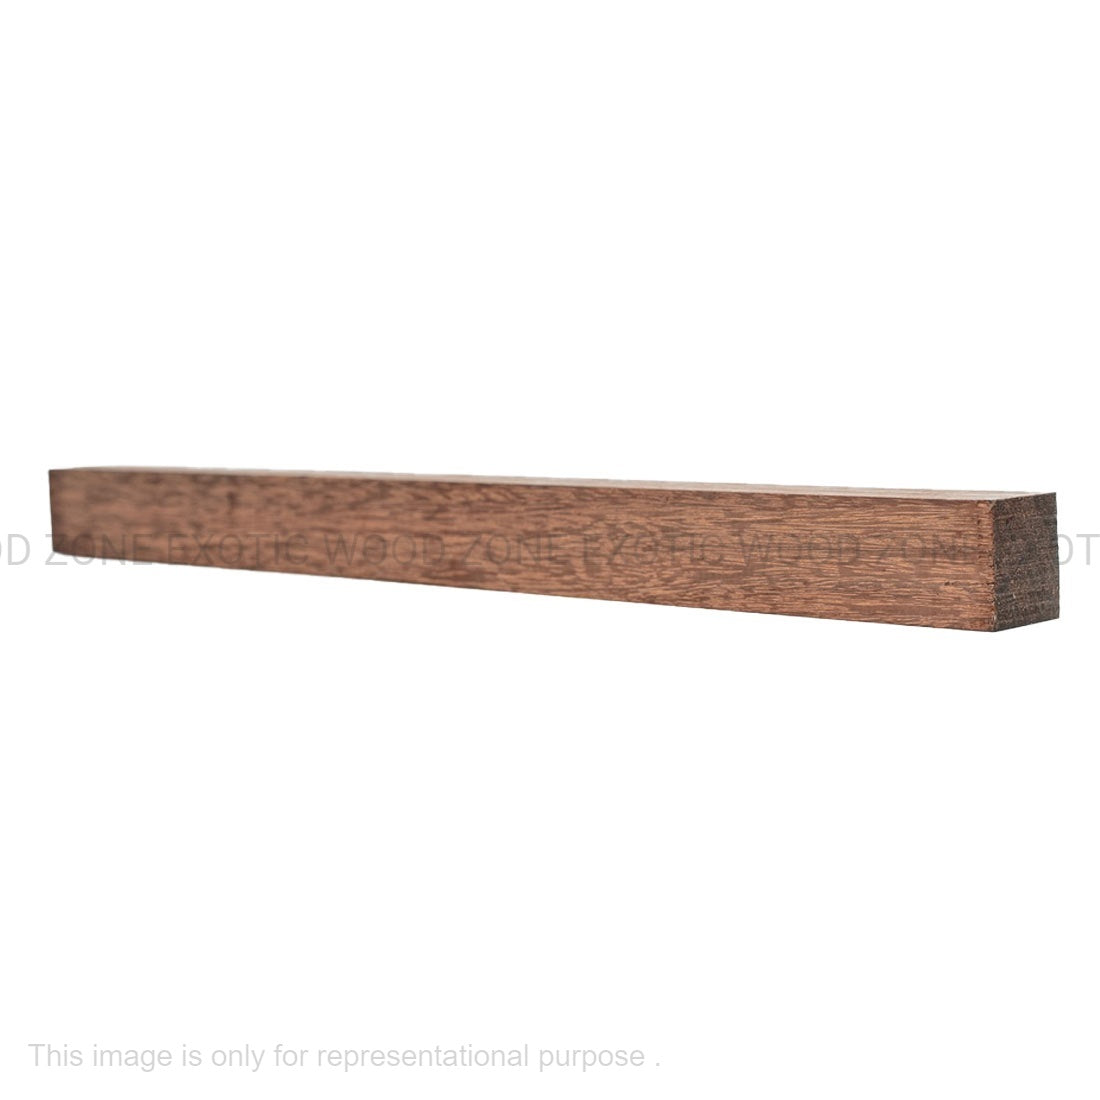 Granadillo Hobby Wood/ Turning Wood Blanks 1 x 1 x 12 pulgadas